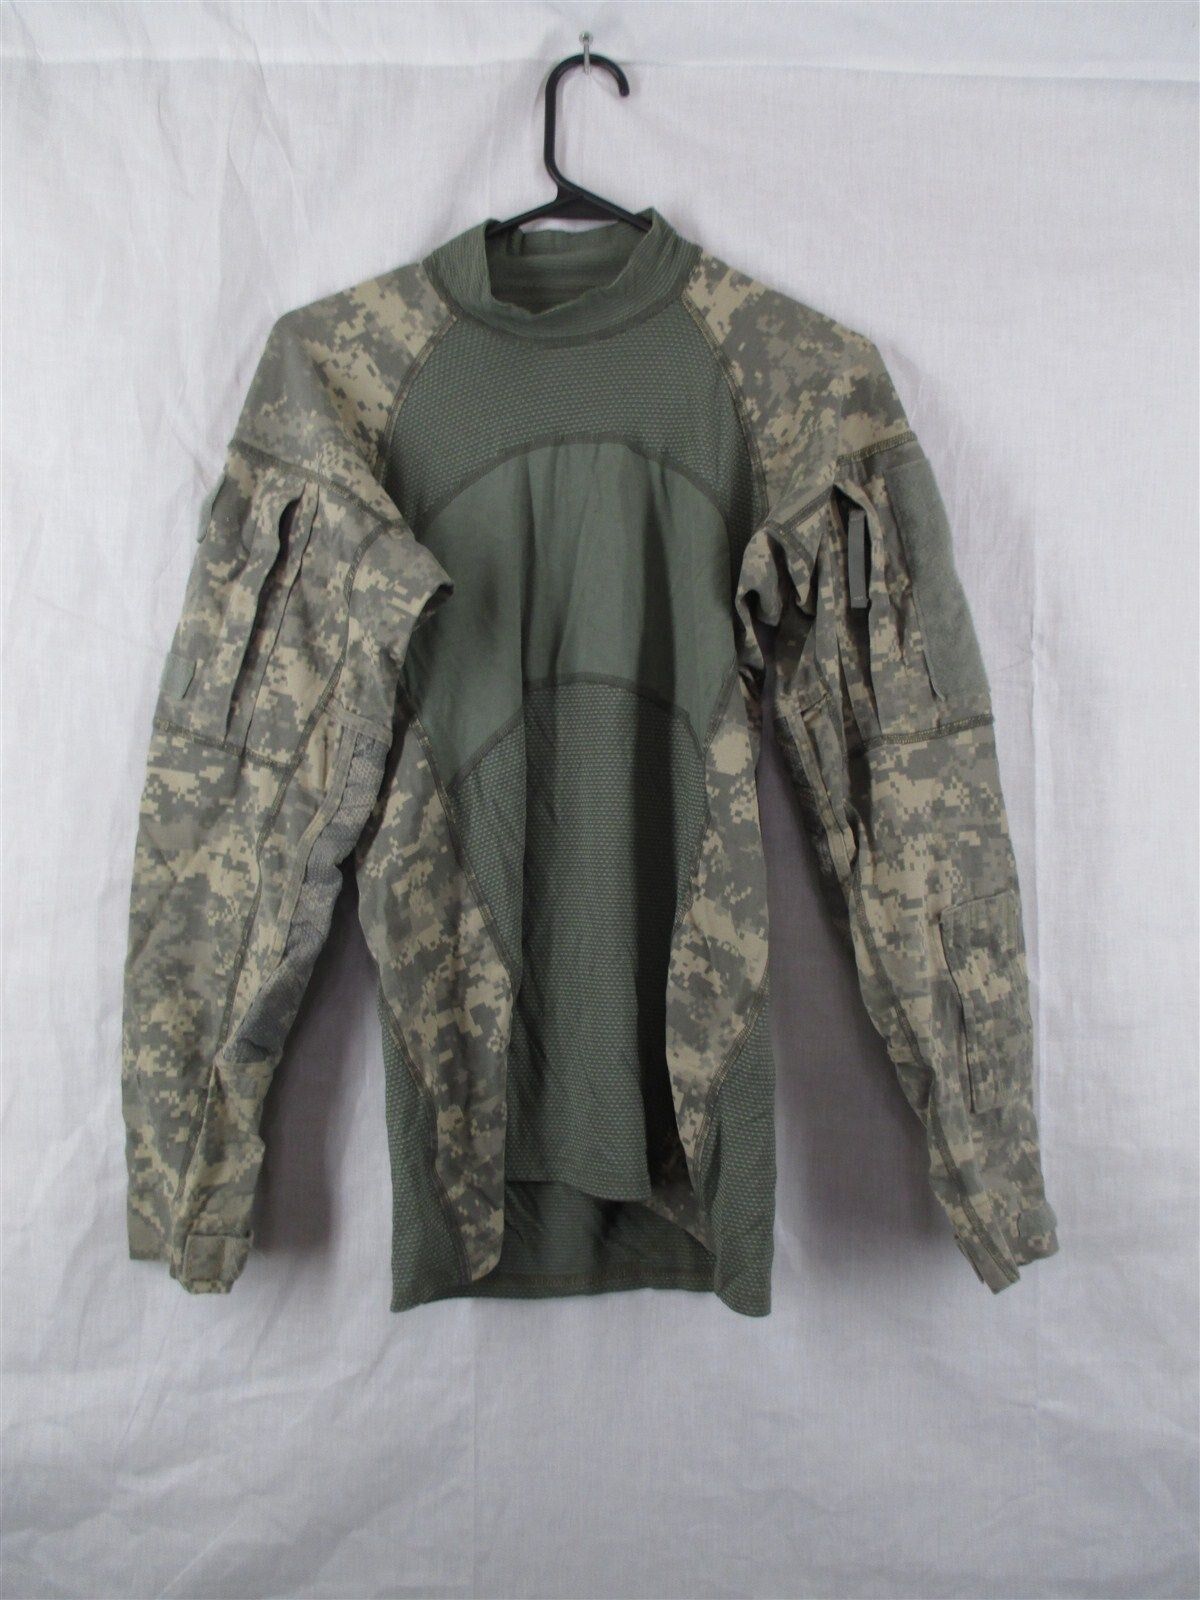 USGI ACU Massif Small Digital Camo Army Combat Shirt Flame Resistant ACS